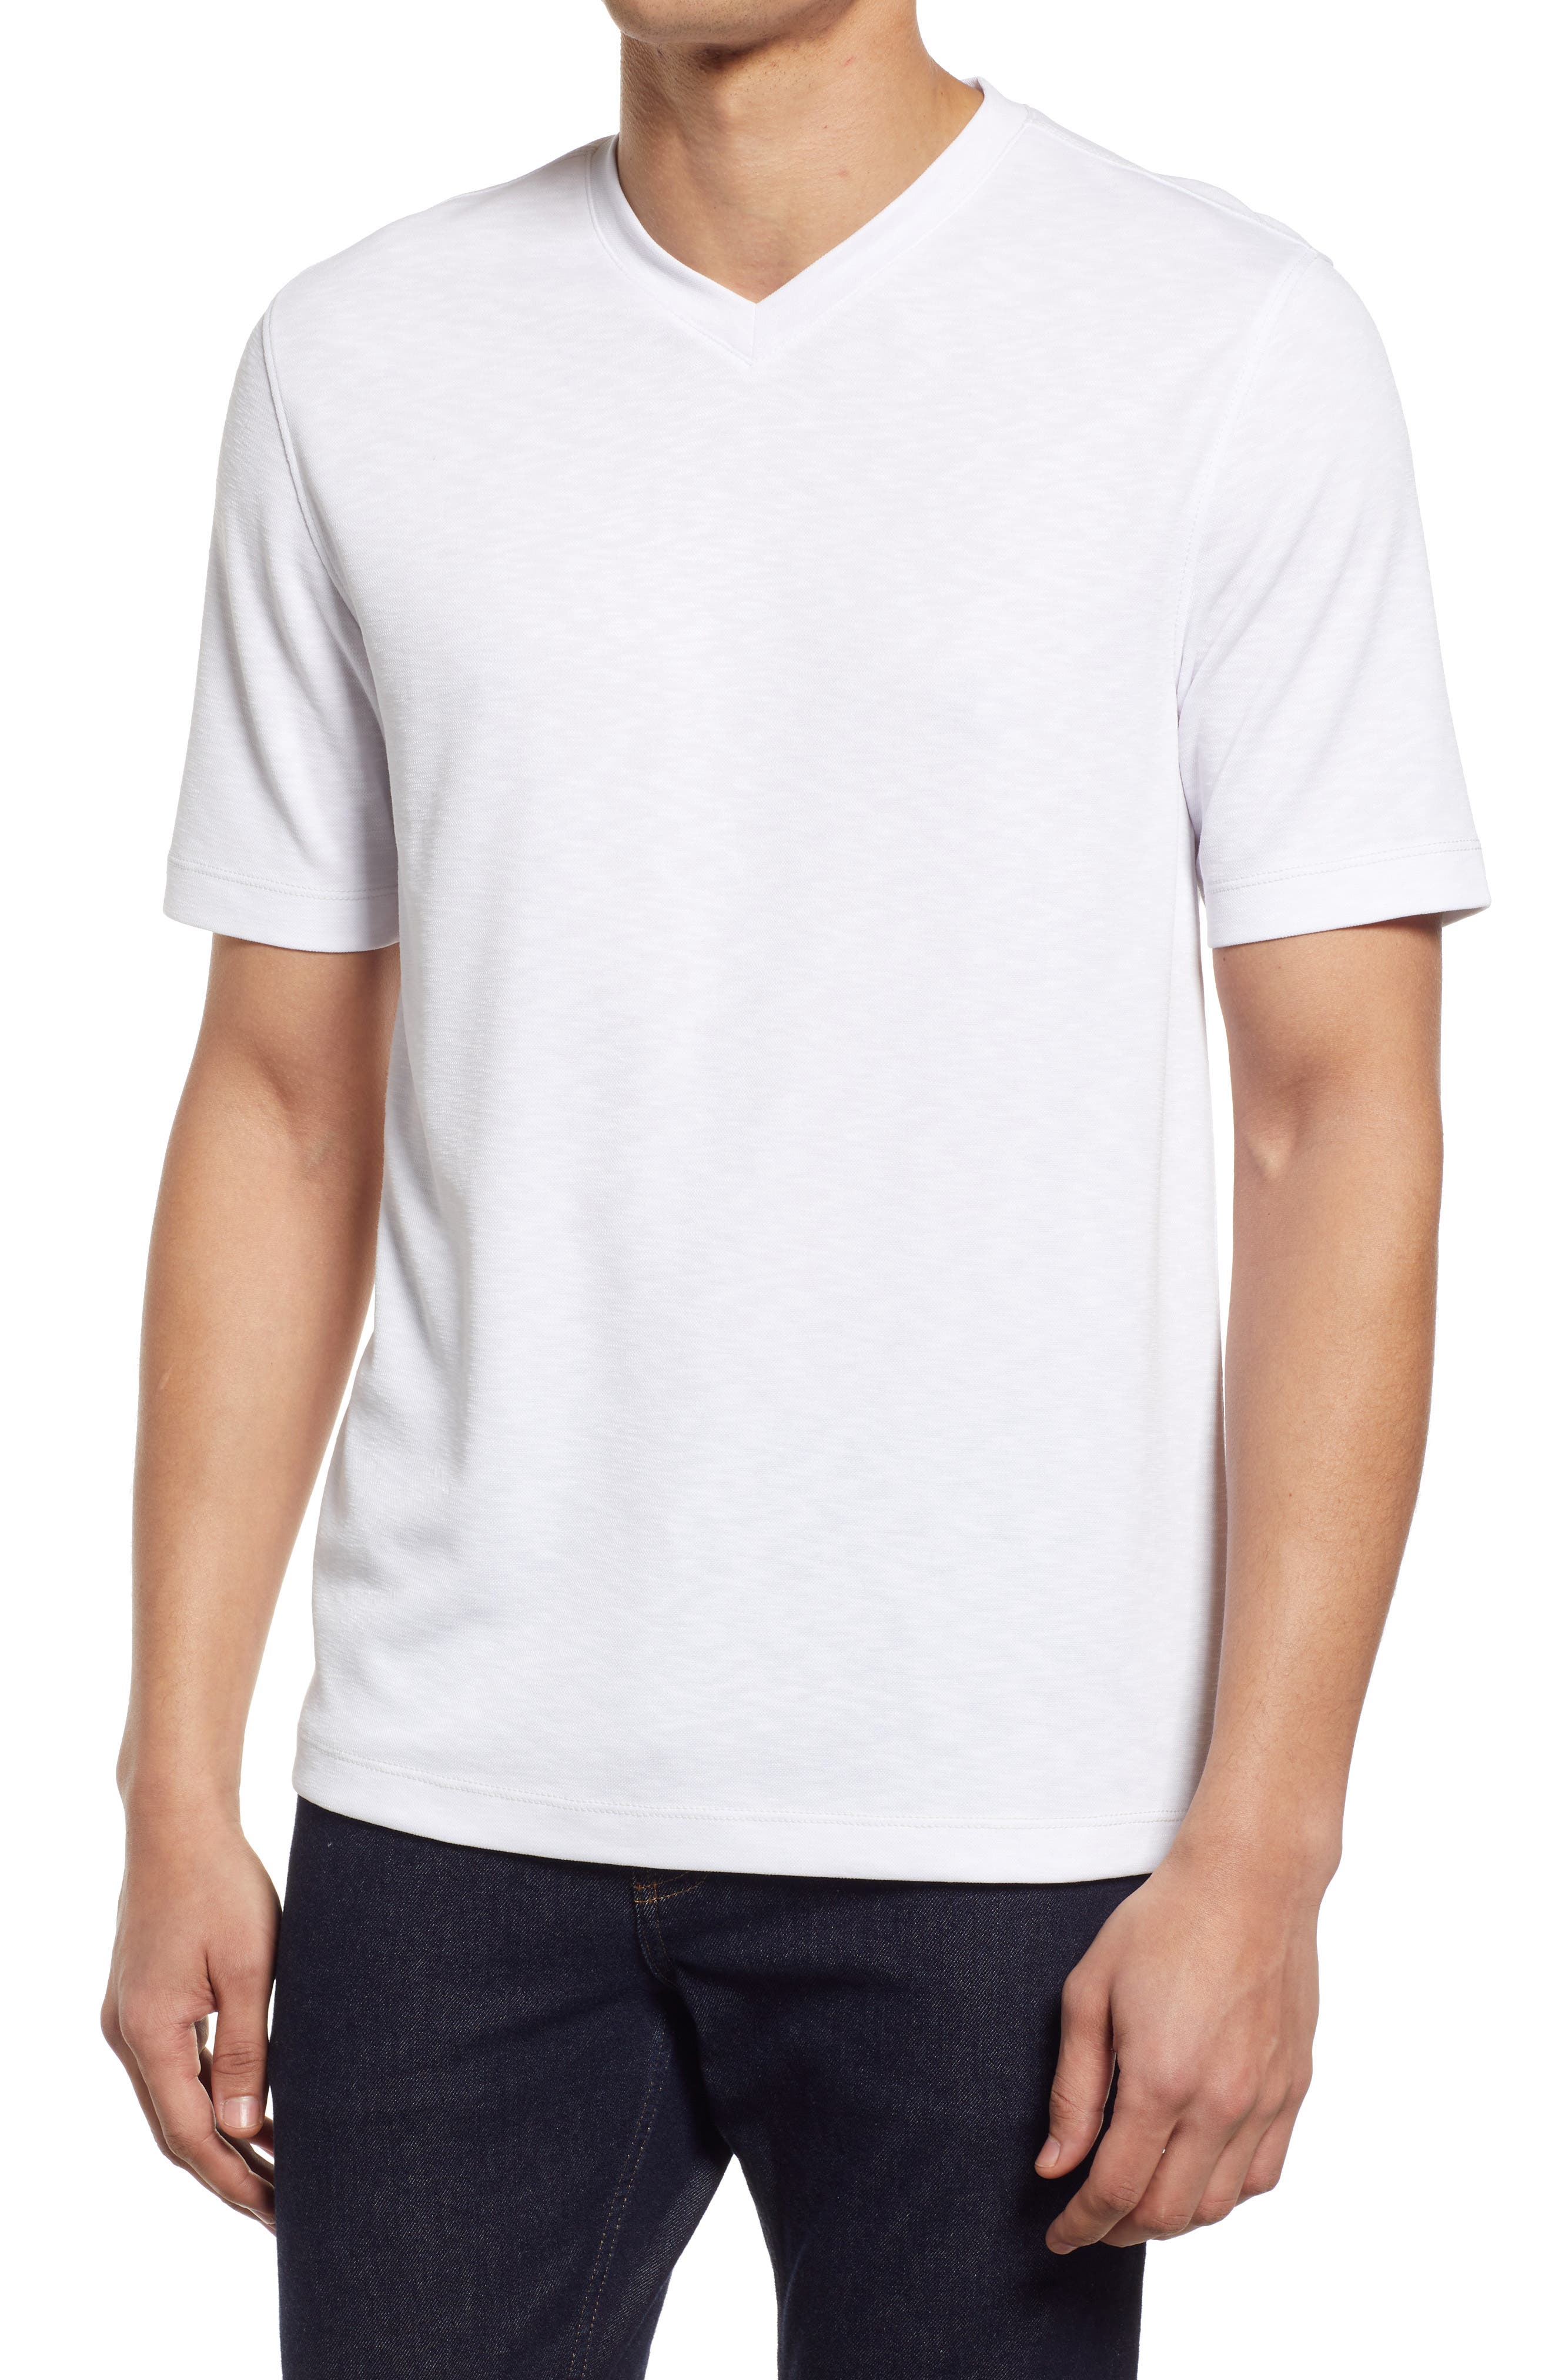 Nouveau Sans Original balises Rag & Bone Homme Basic V-Neck Tee T-shirt blanc 